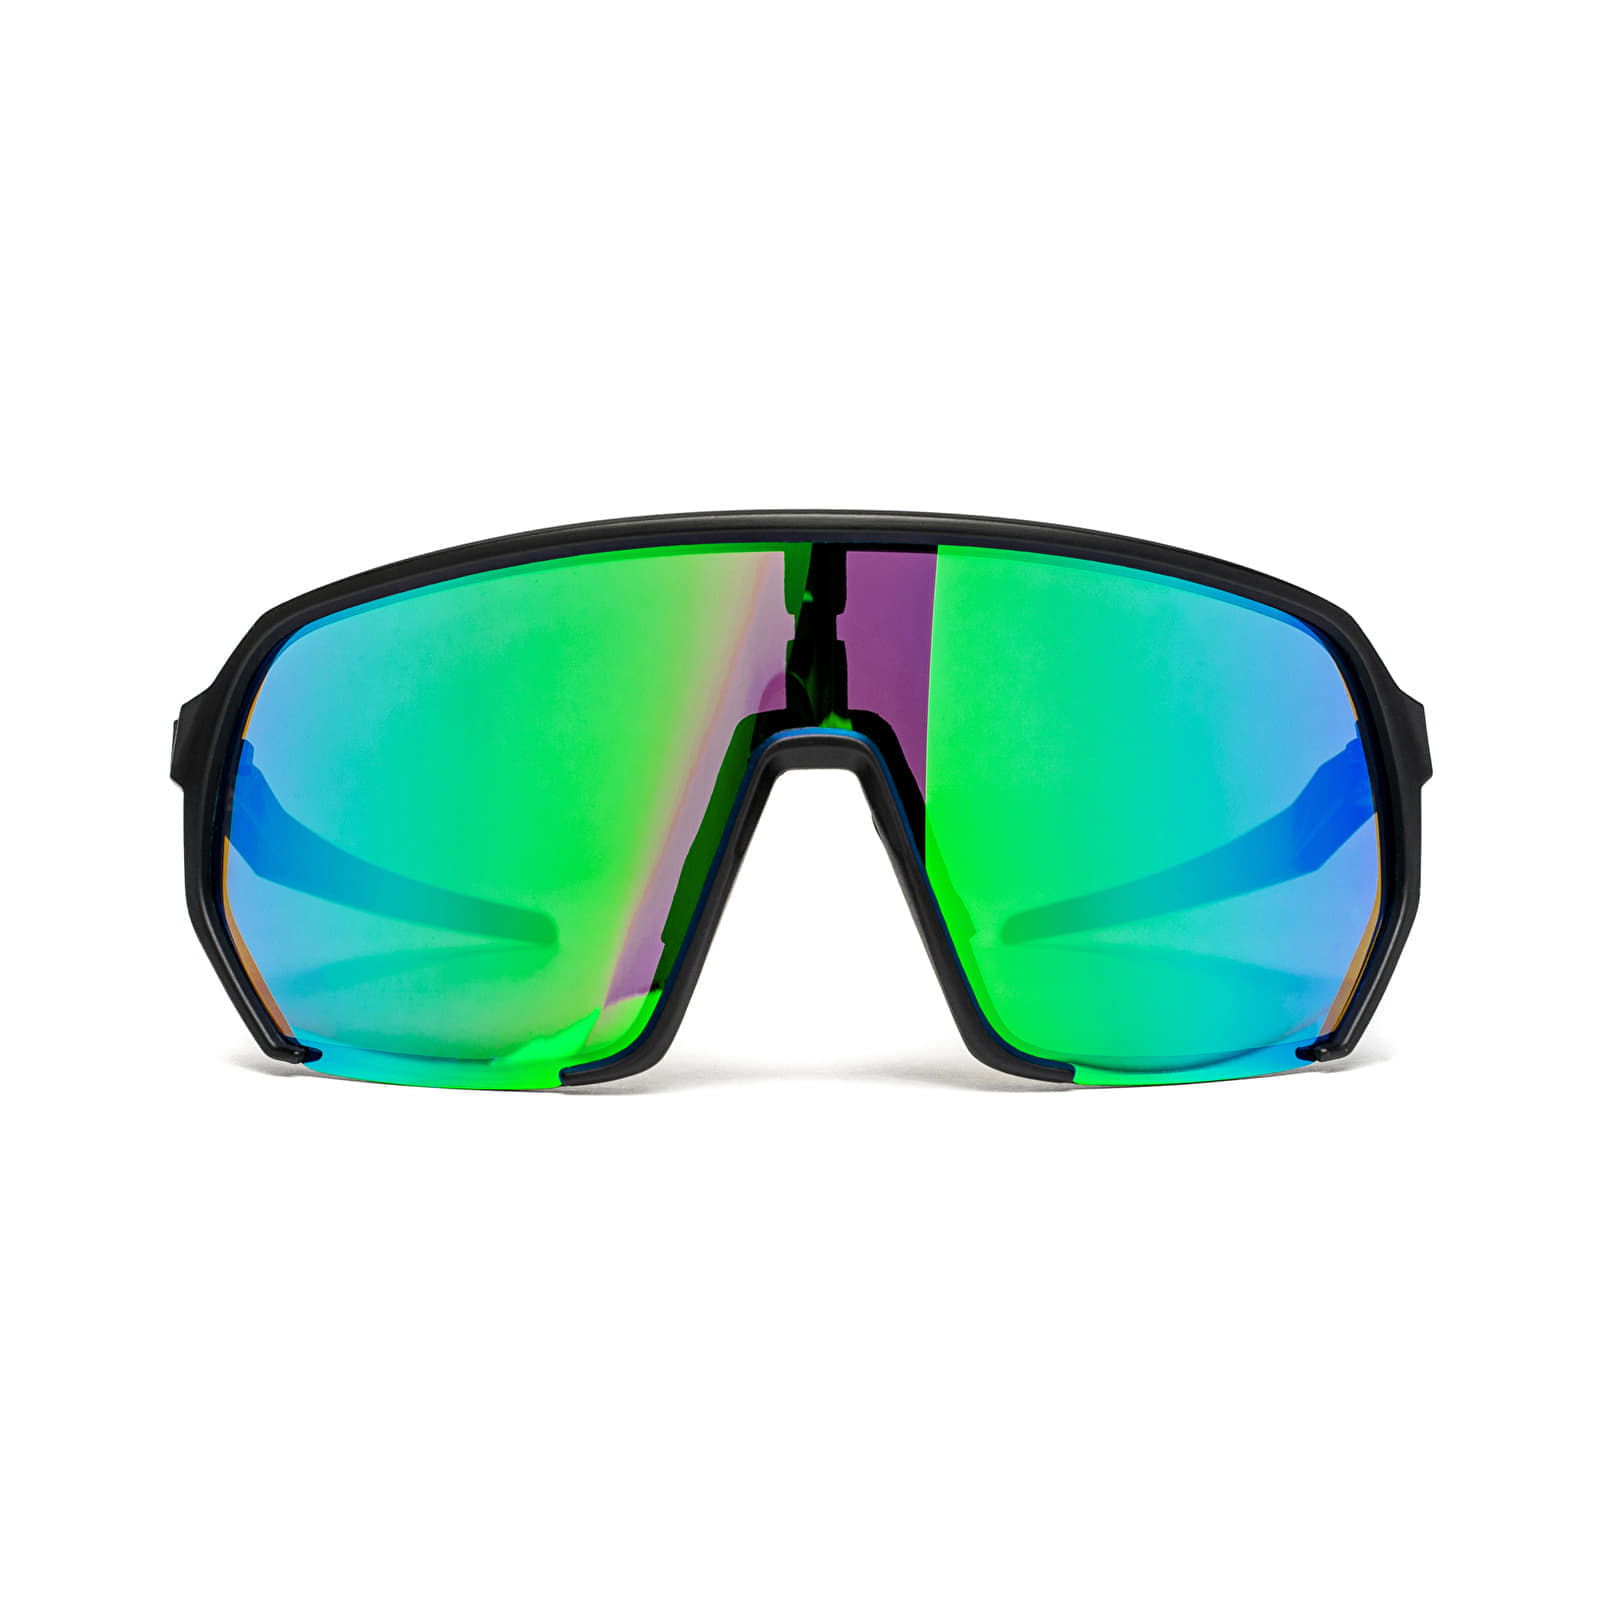 Archie Bike Sunglasses Black/ Mirror Green